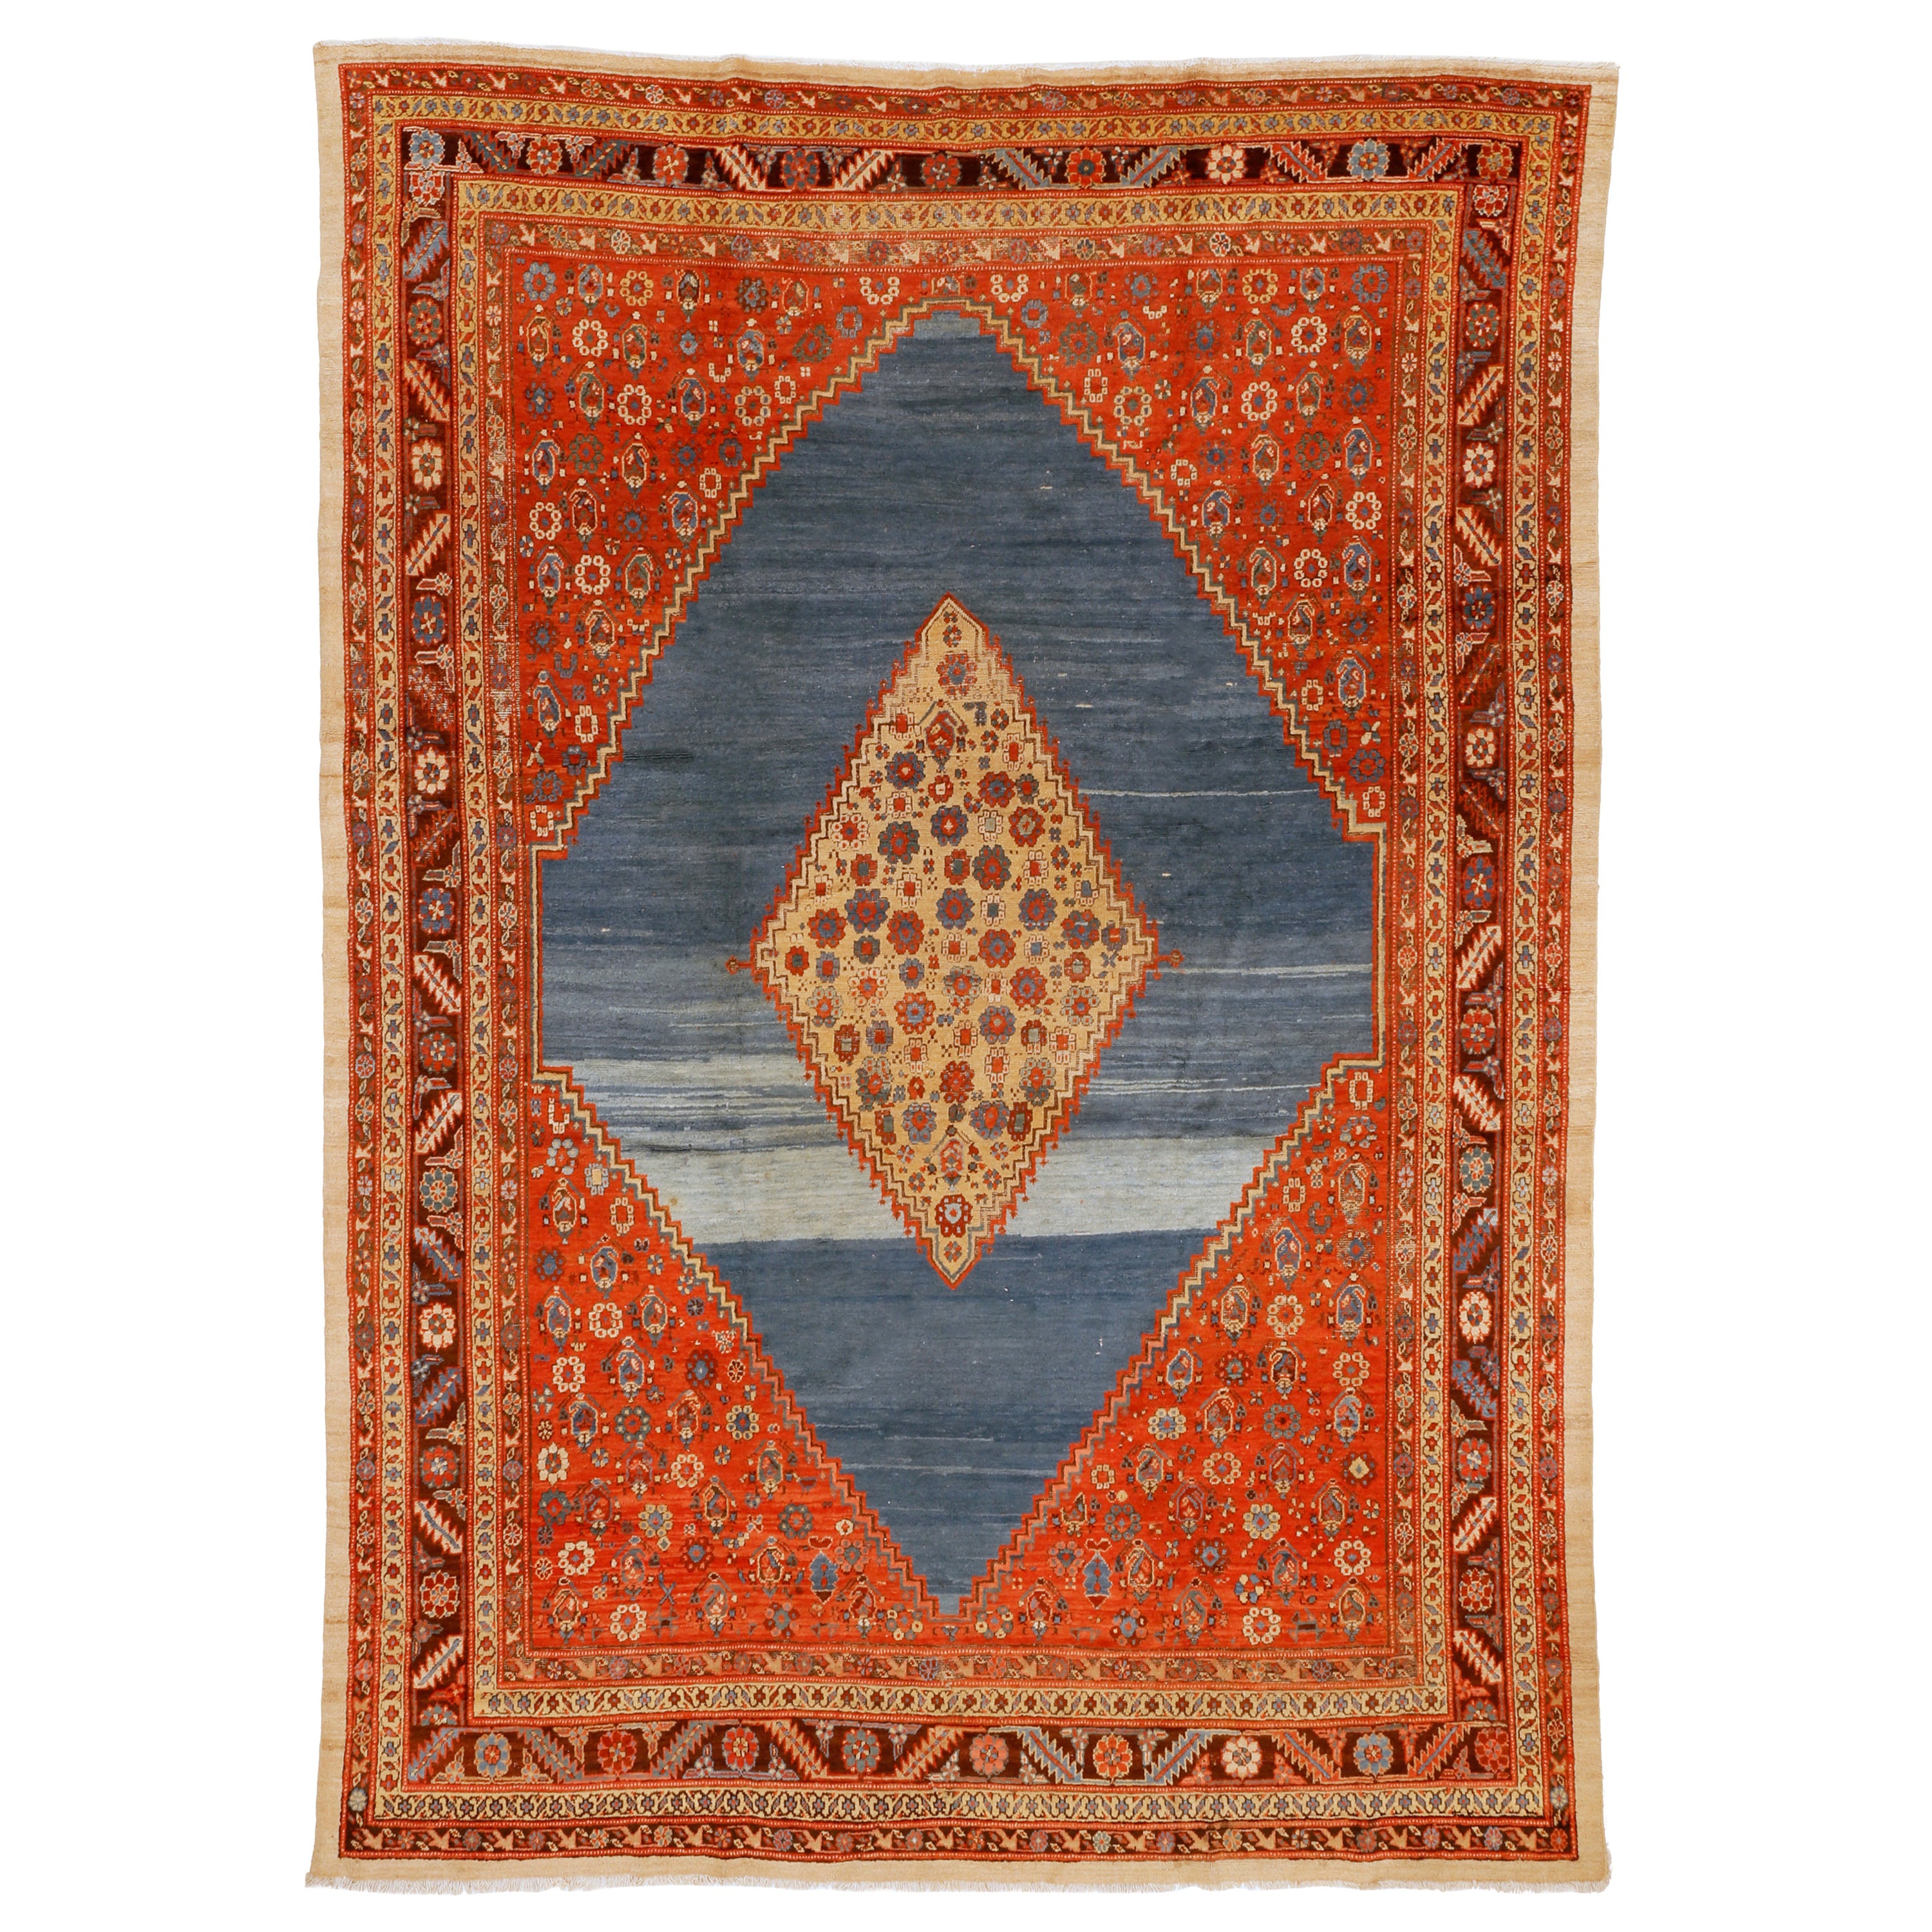 Outstanding Sky Blue Antique Bakshaish Carpet with Sun Yellow Central Diamond For Sale